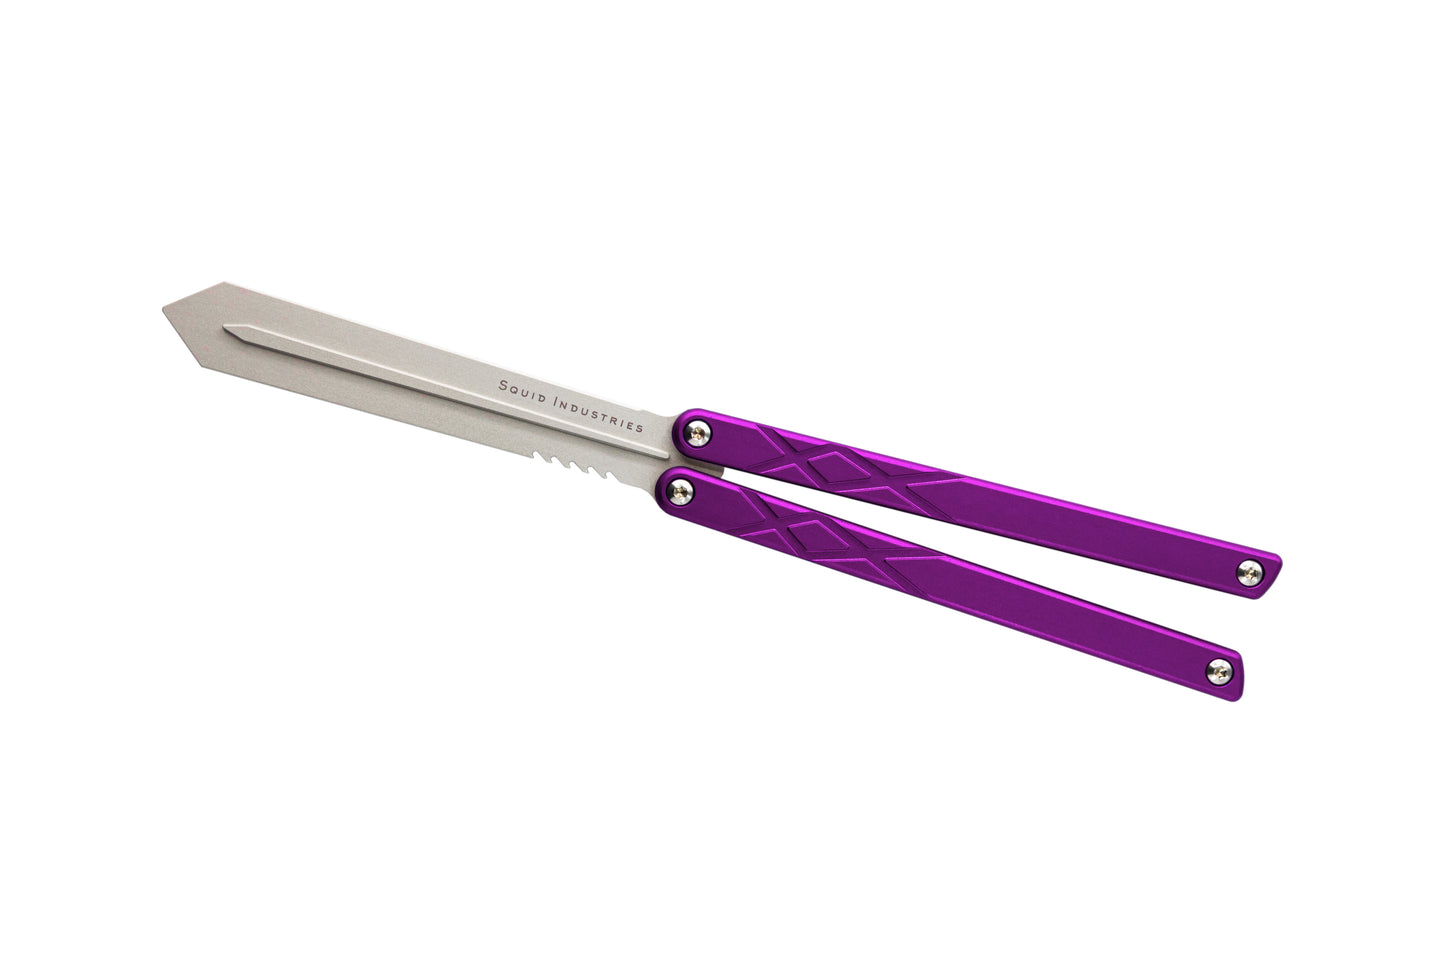 silver blade purple handles silver hardware swordfish balisosng butterfly knife trainer fidget toy